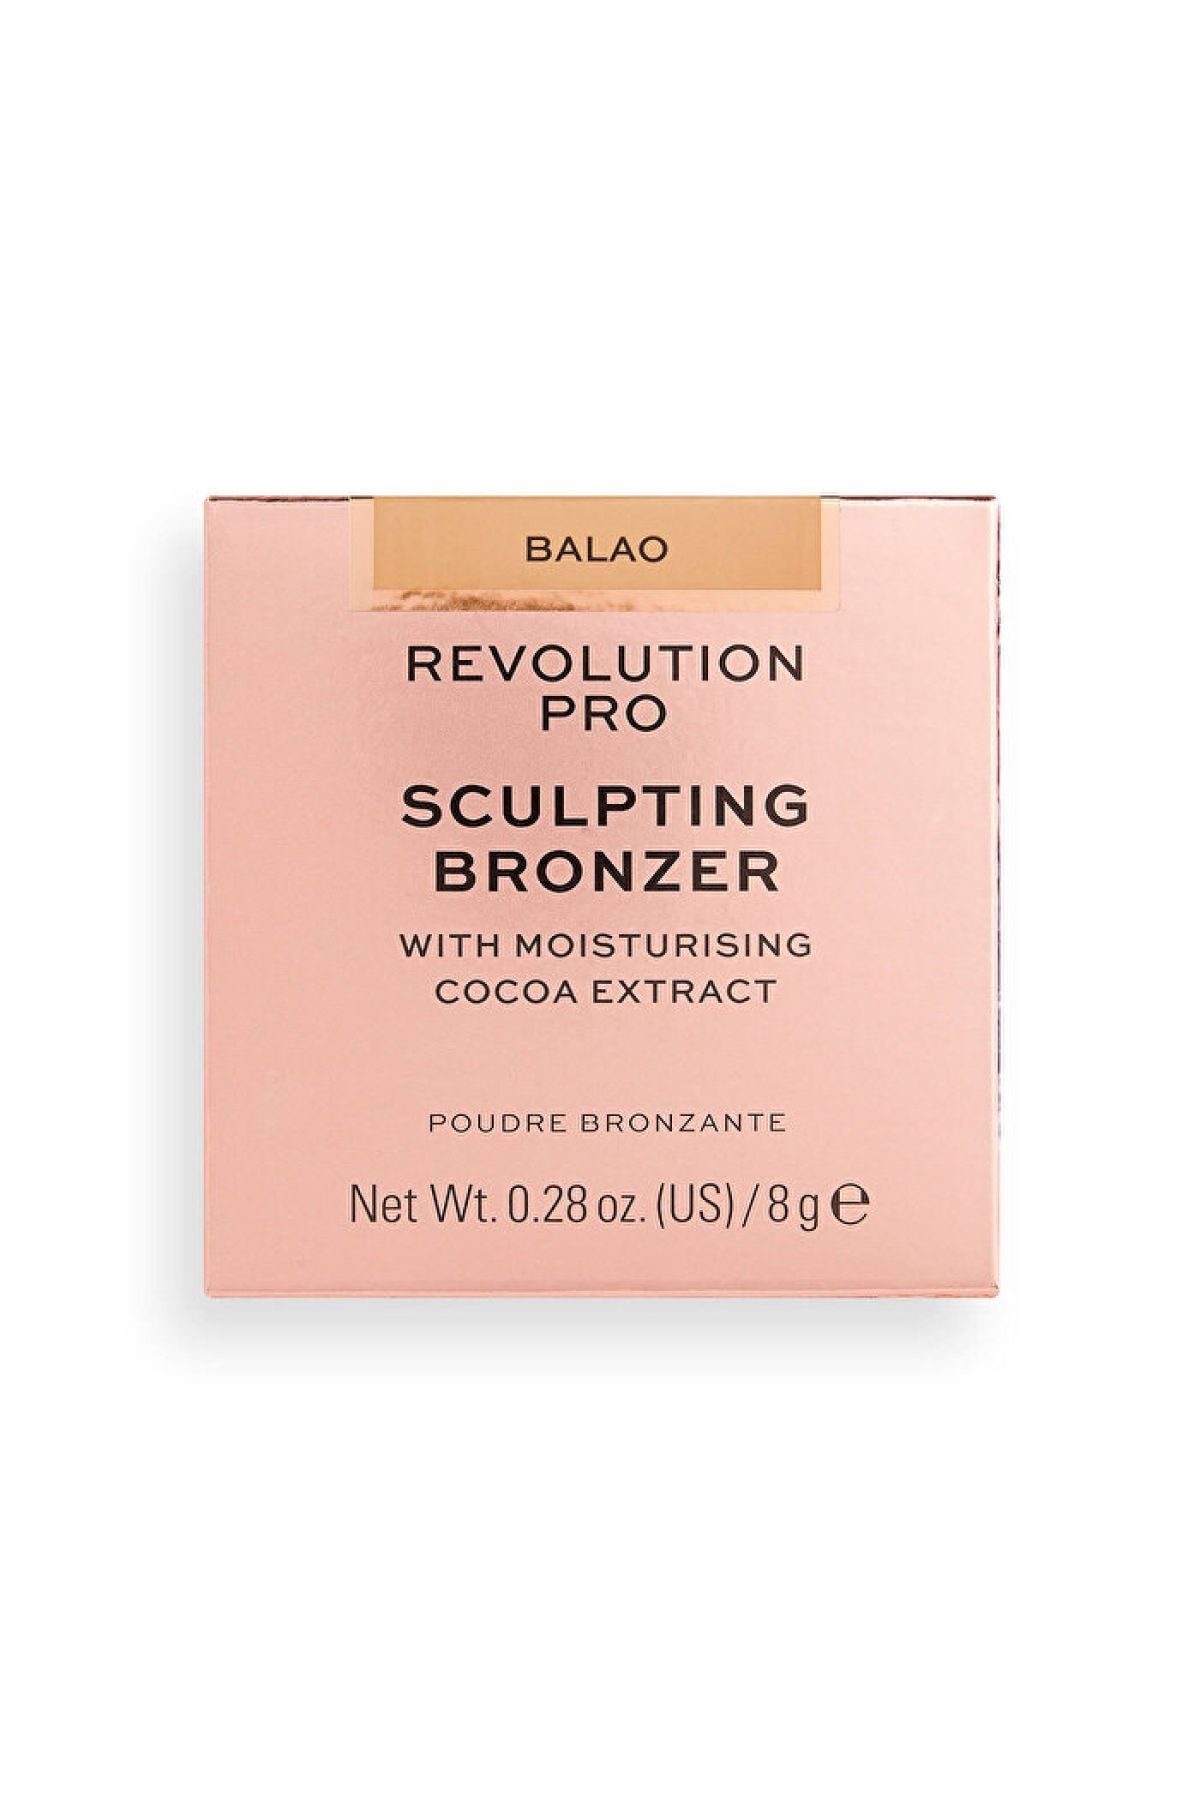 Revolution Pro Bronzer
balao